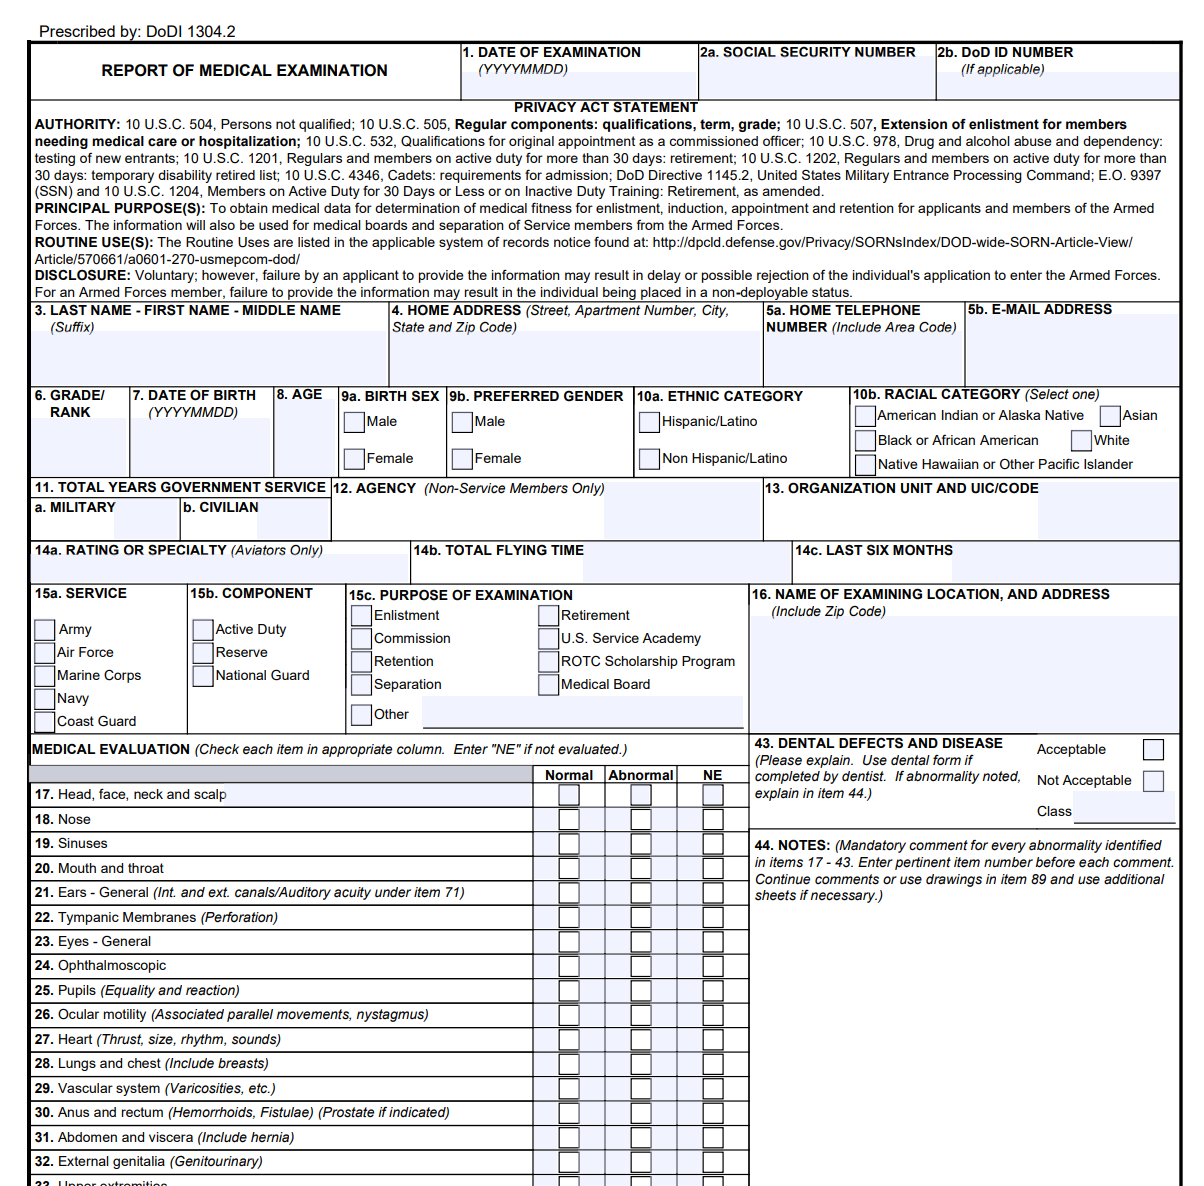 dd-form-2808-report-of-medical-examination-forms-docs-2023